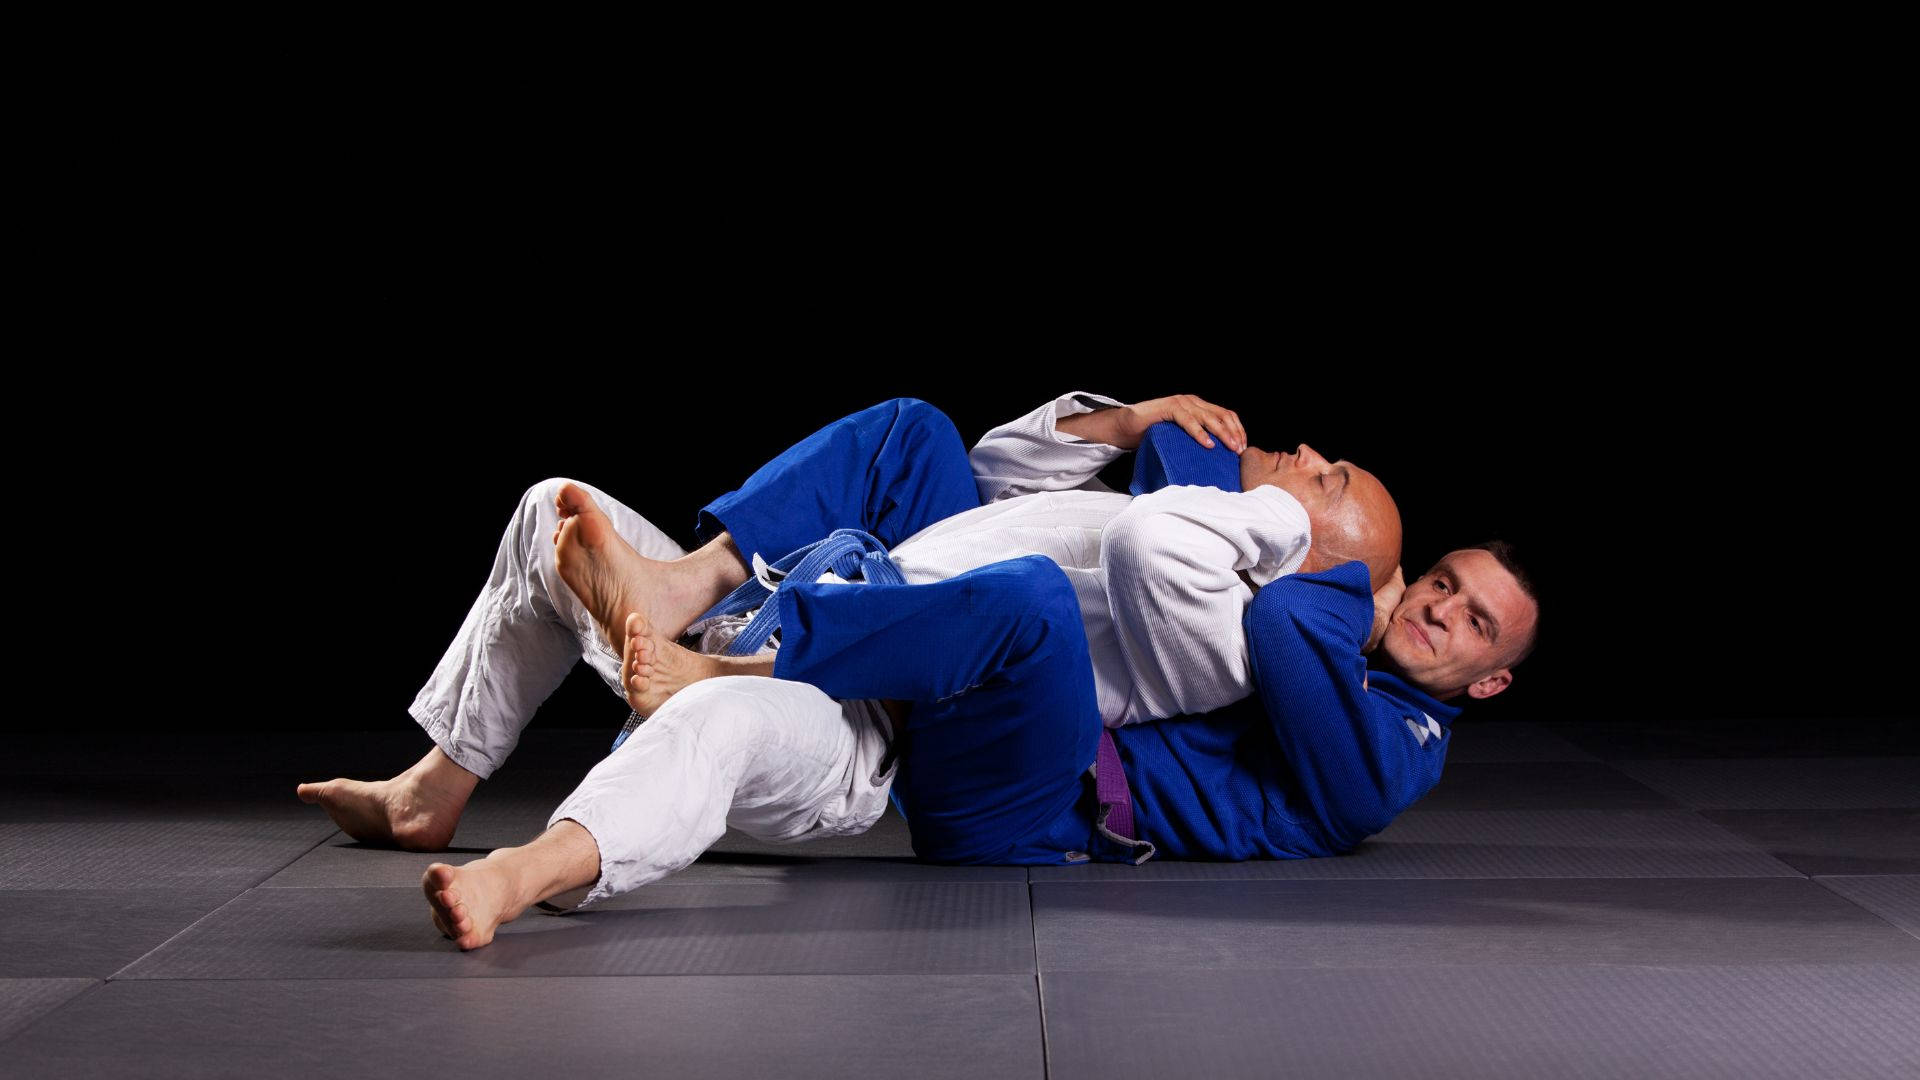 Download Brazilian Jiu-jitsu Martial Arts Challenge Wallpaper | Wallpapers .com